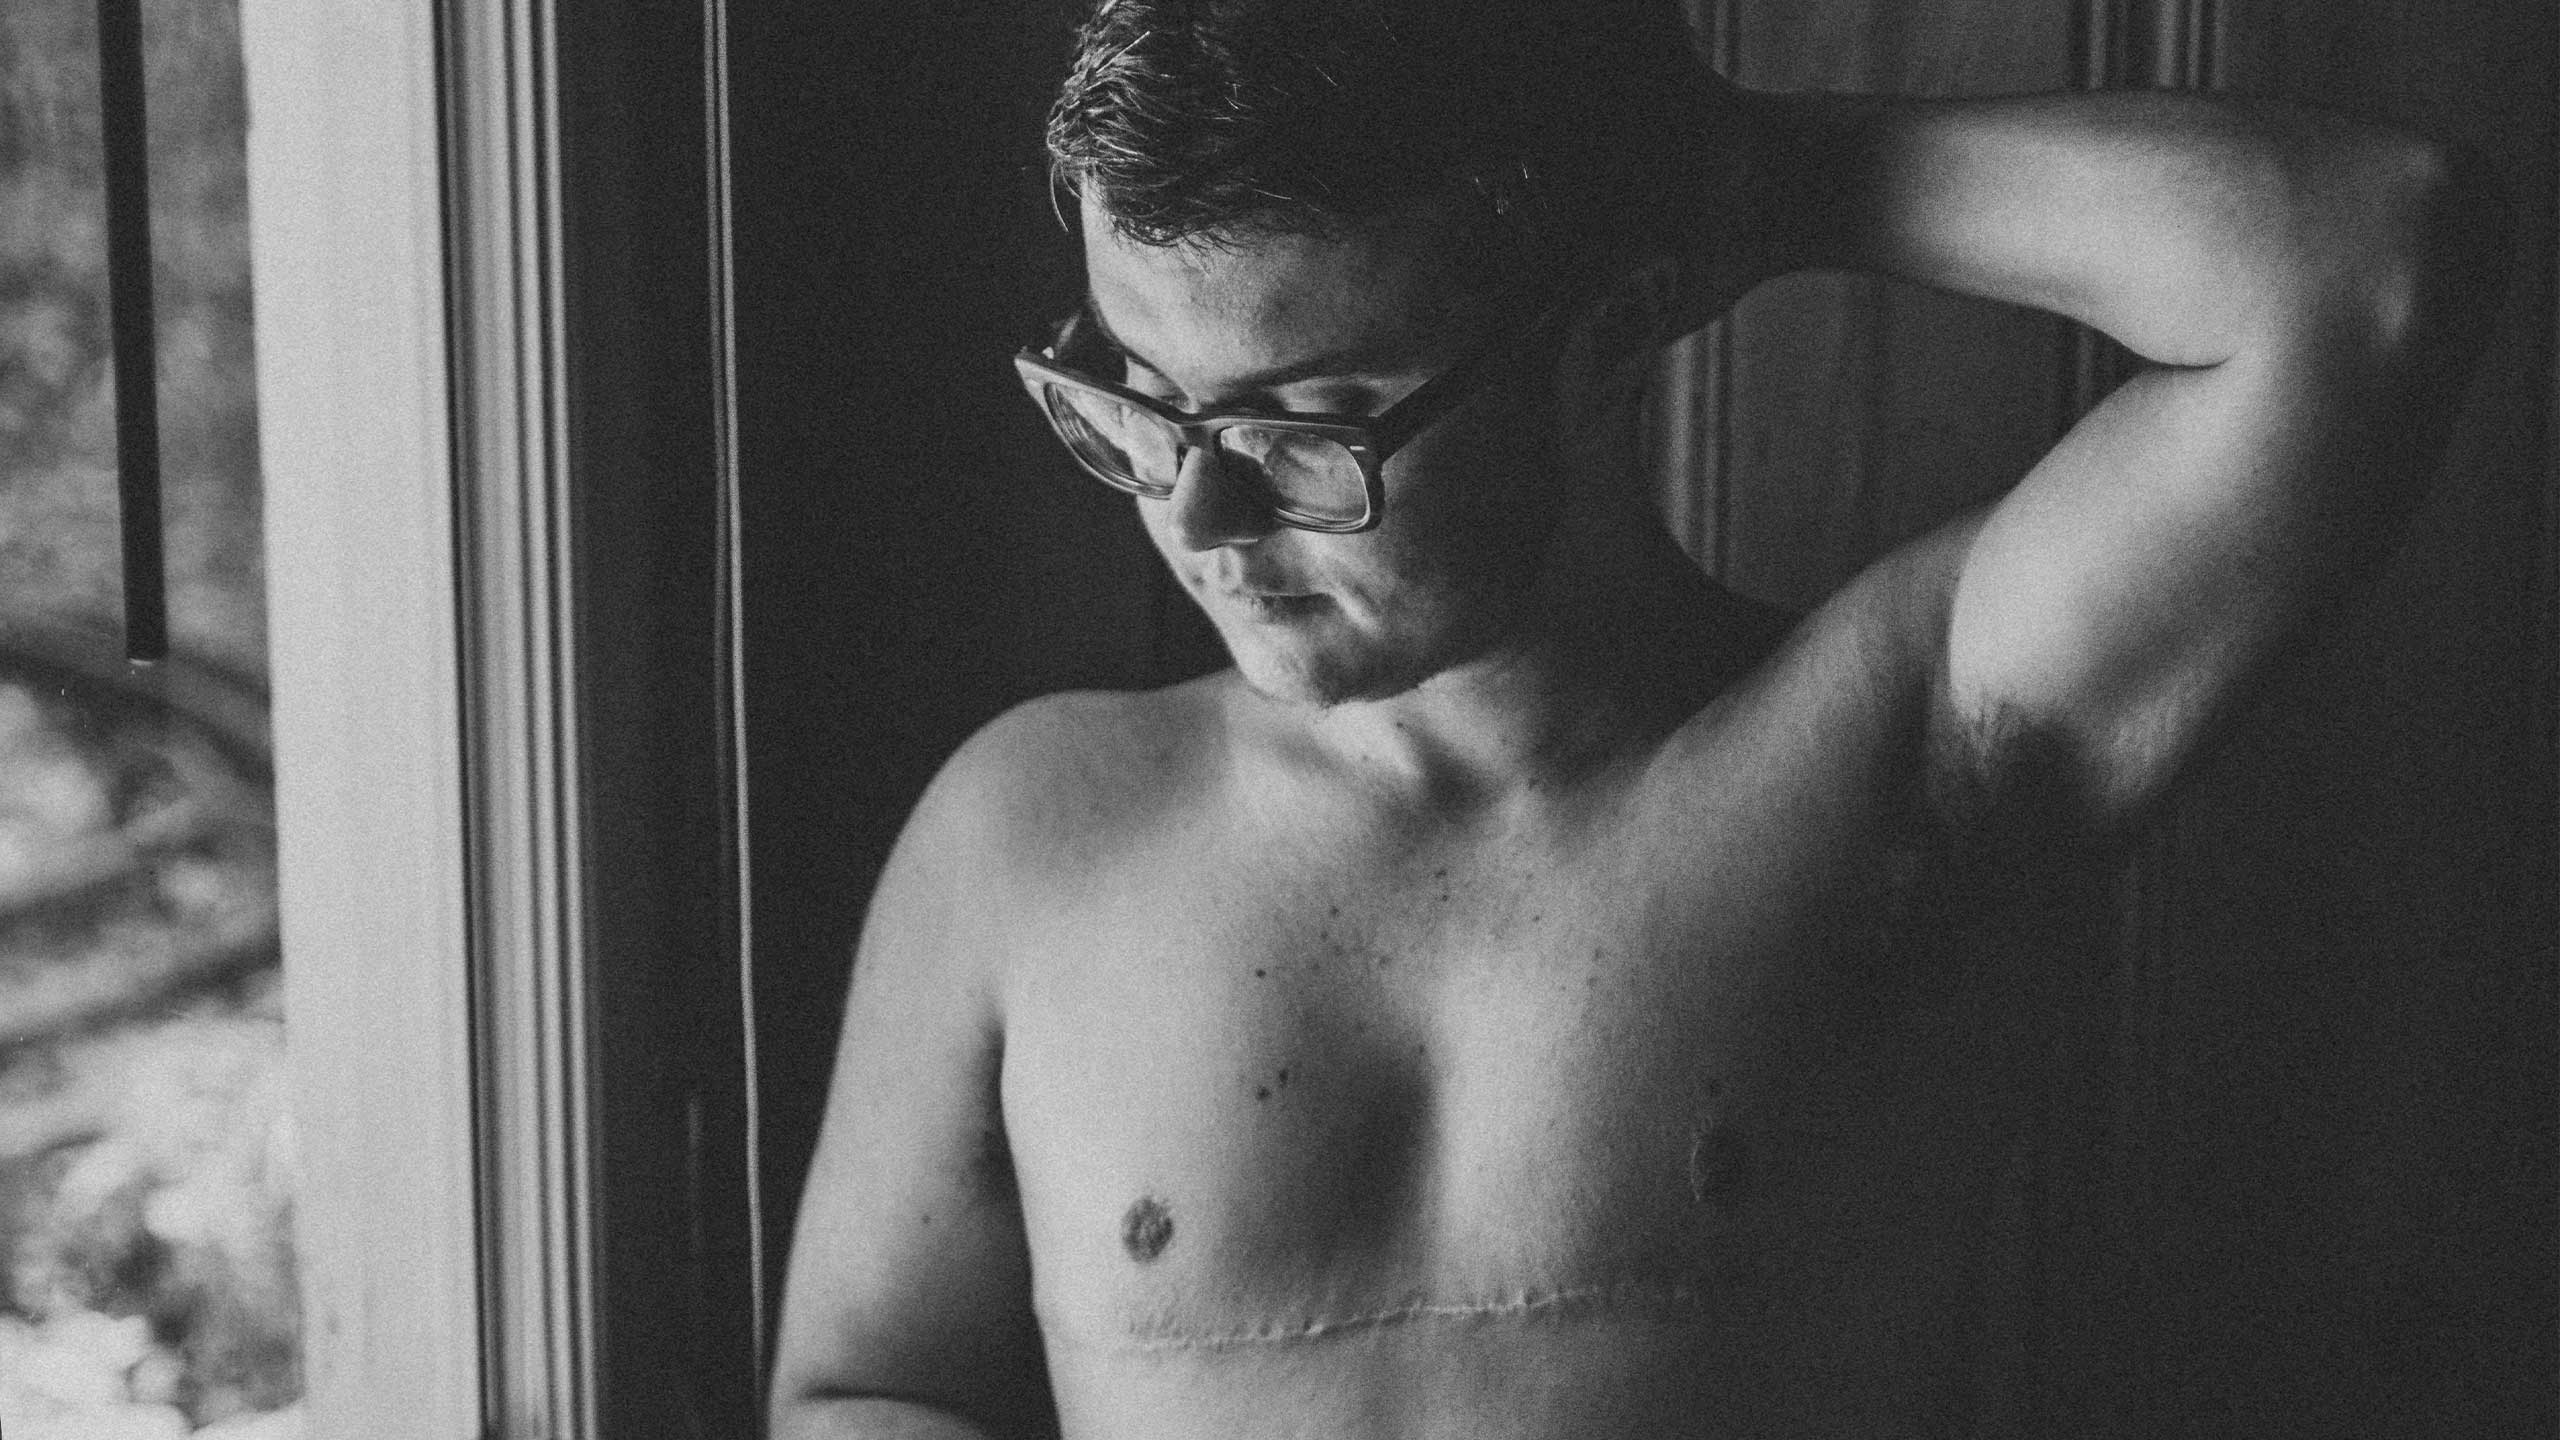 christian tayco share nude trans man photos